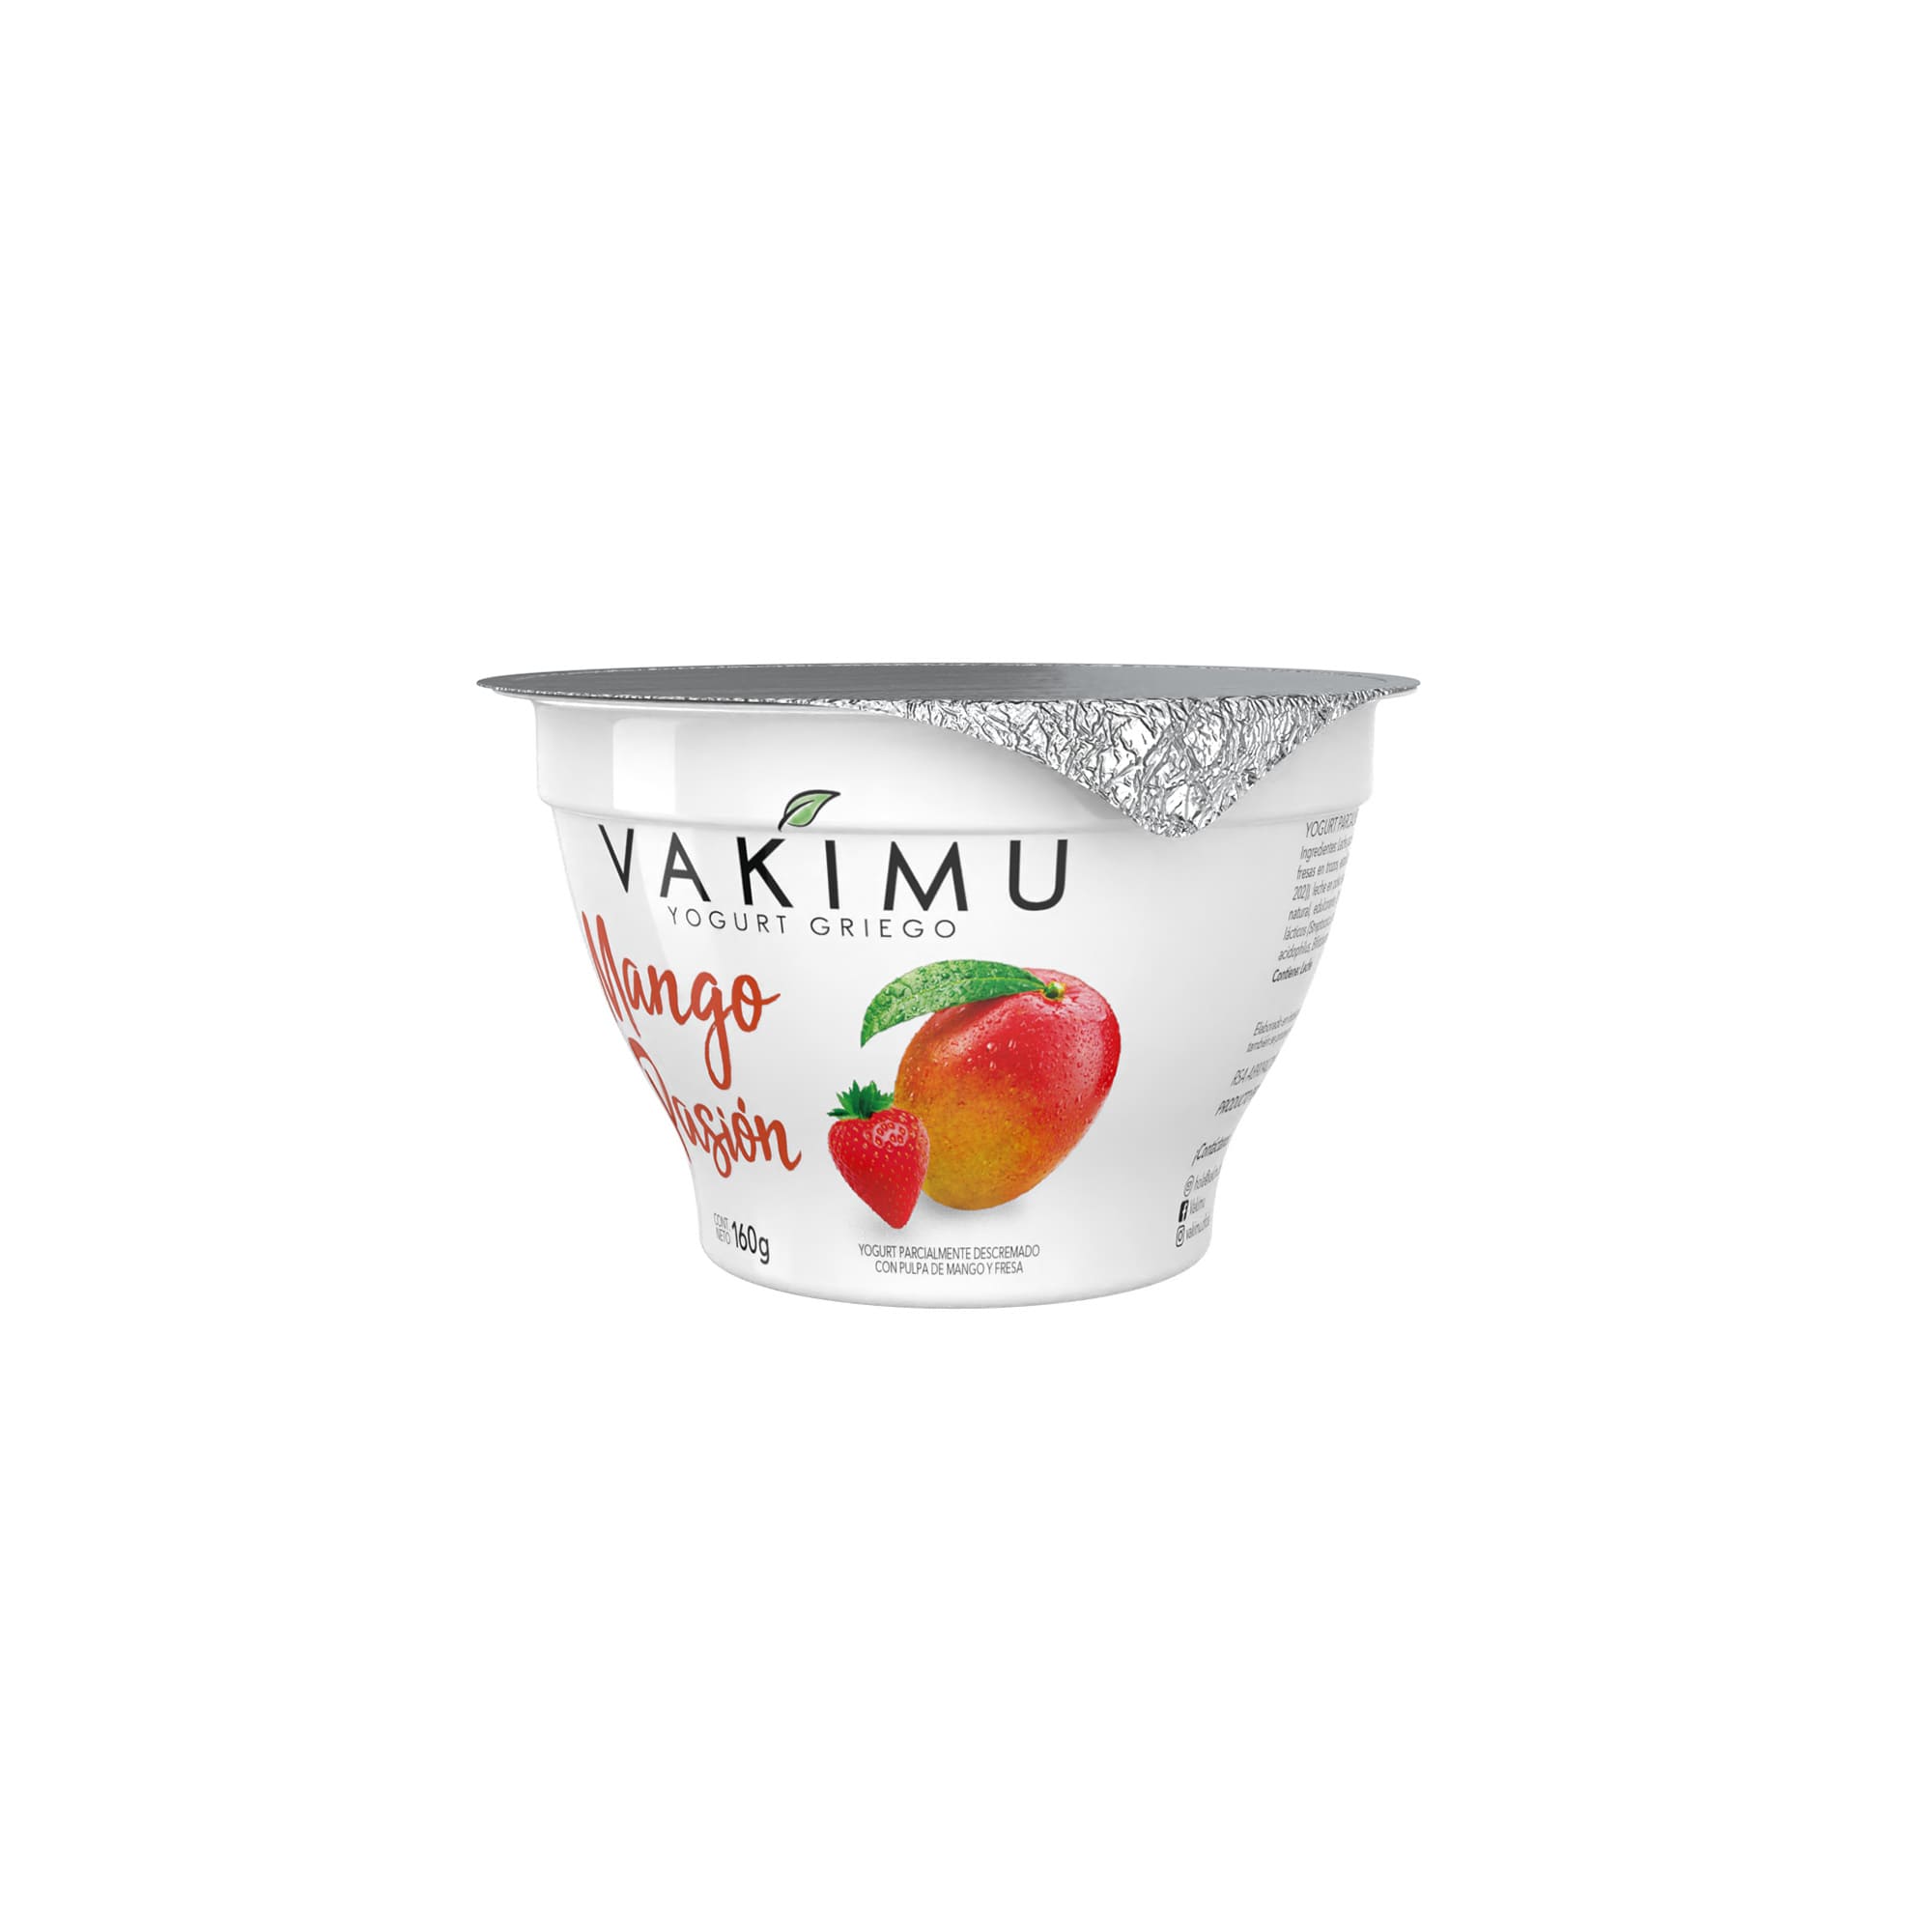 Yogurt Griego Vakimu Mango Pasión 160g